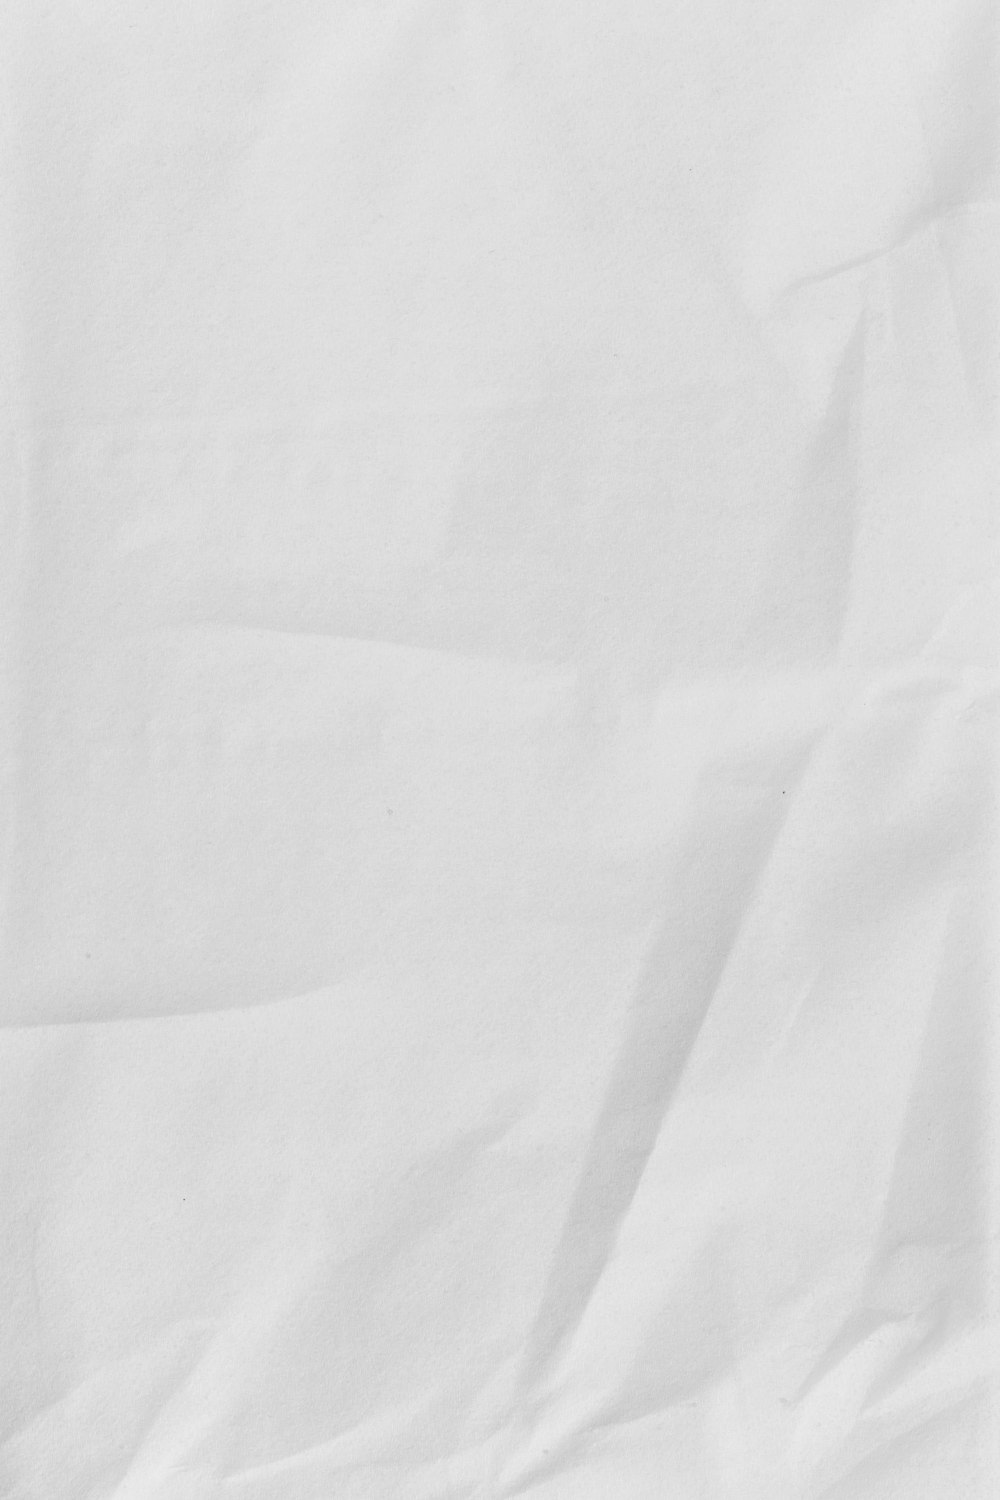 Close-up White Plain Paper Texture Stock Image - Image of screwed, plain:  97127149